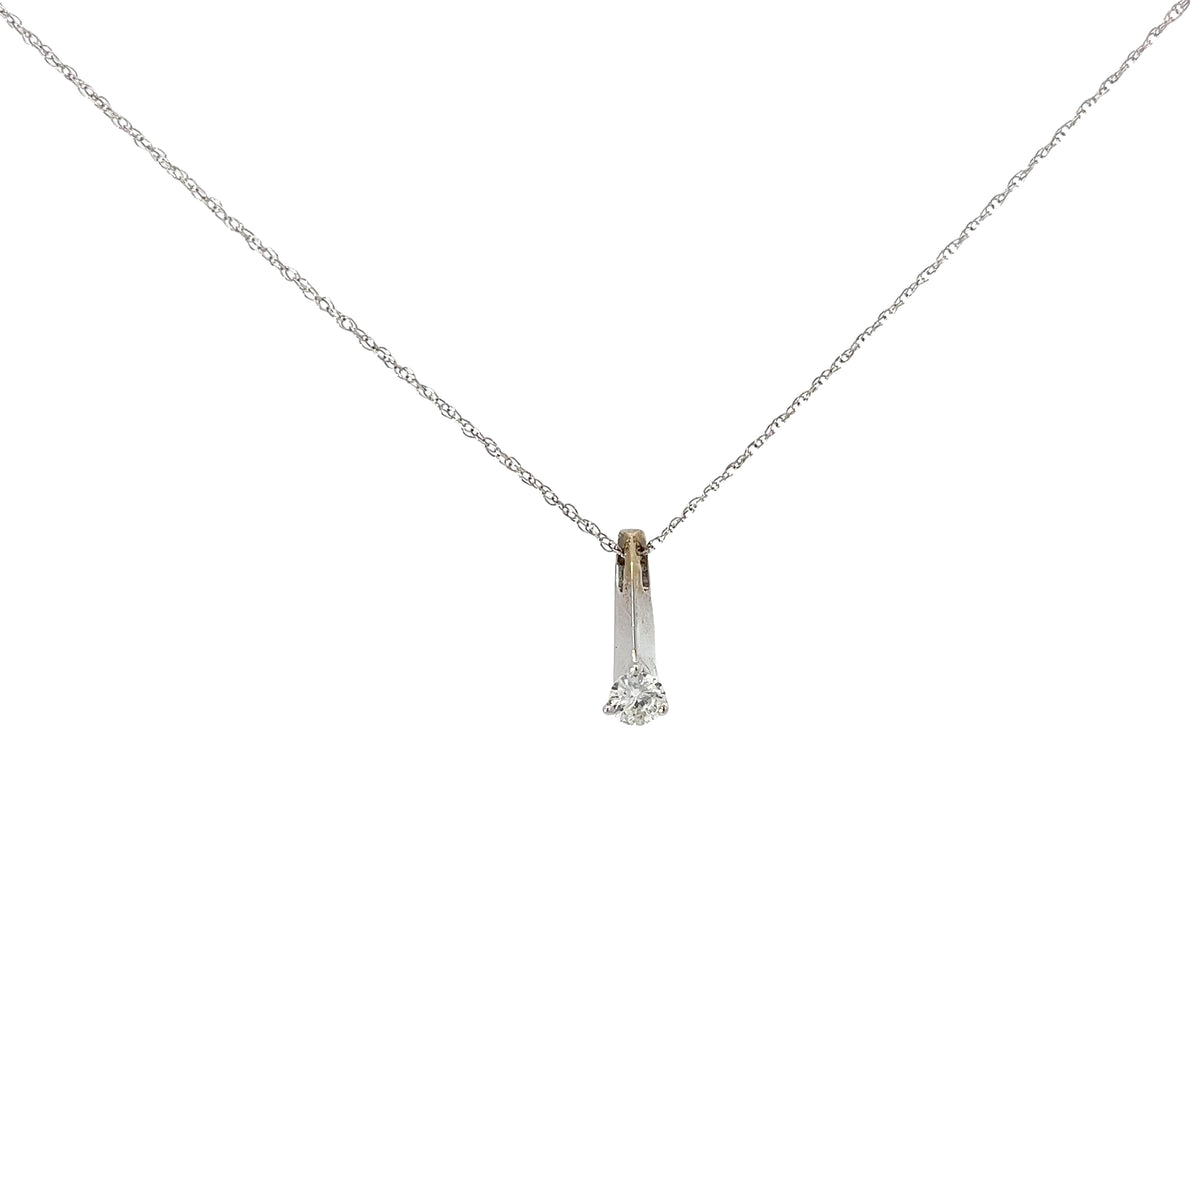 Ladies 14k white gold Diamond Solitaire necklace